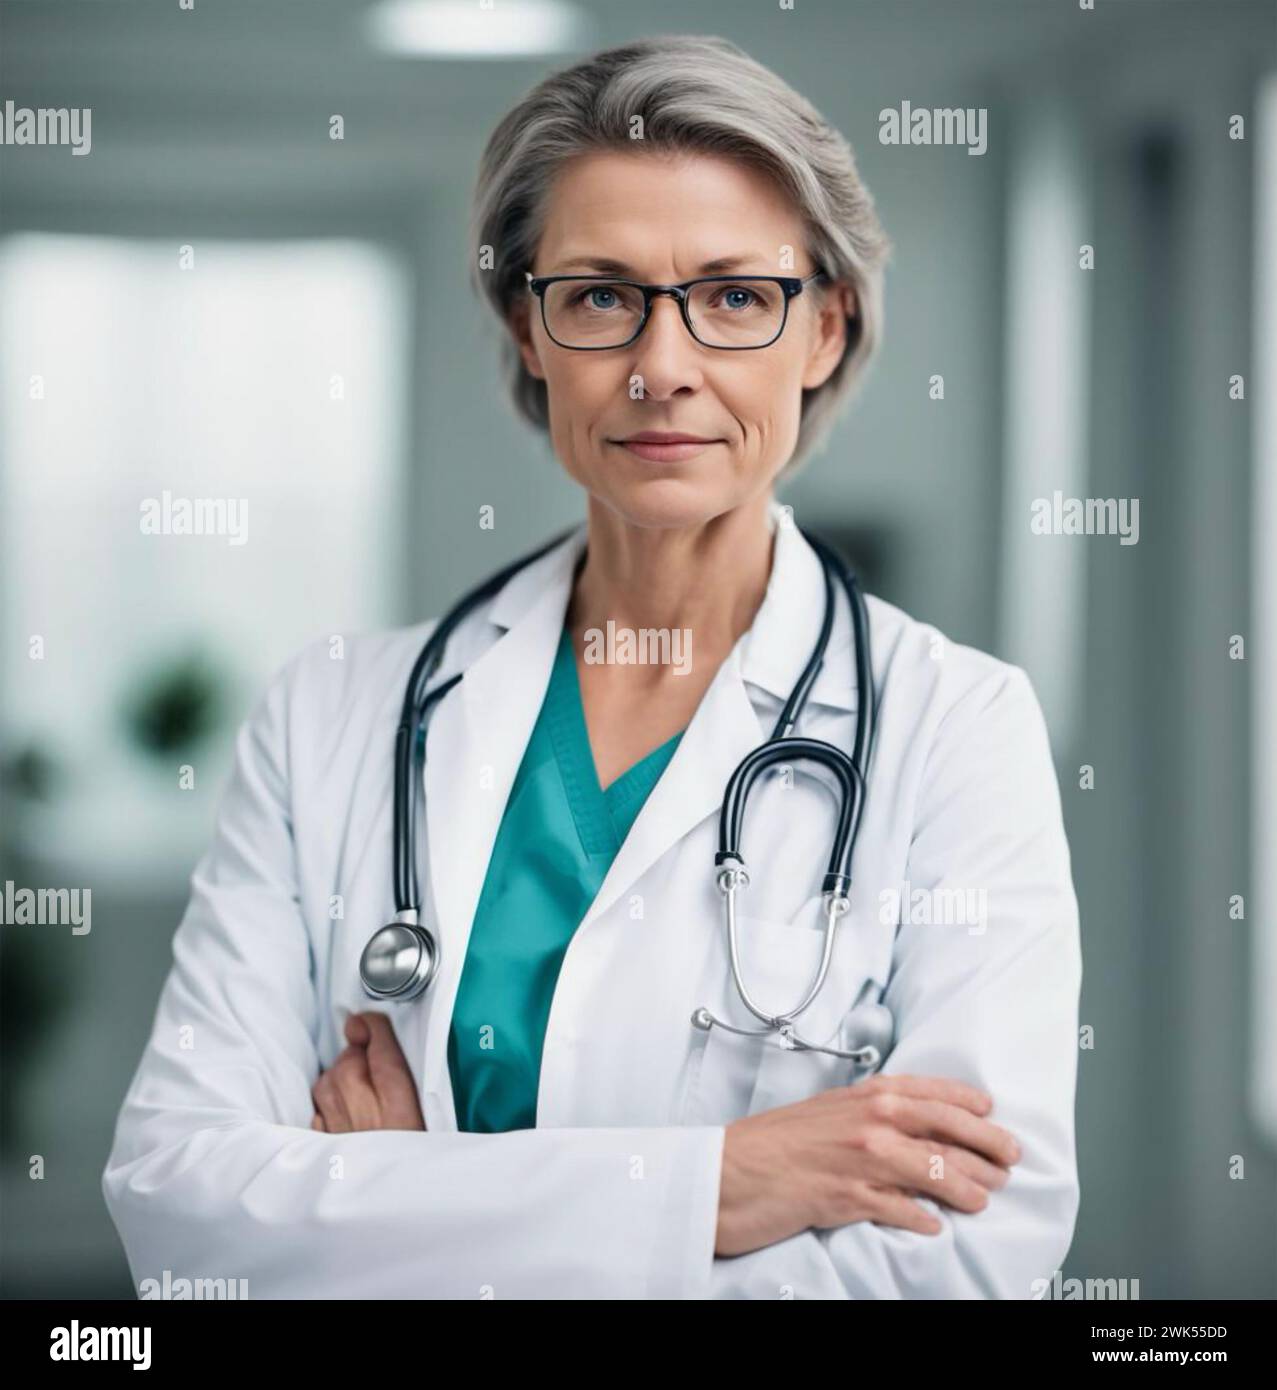 FEMALE DOCTOR Stock Photo